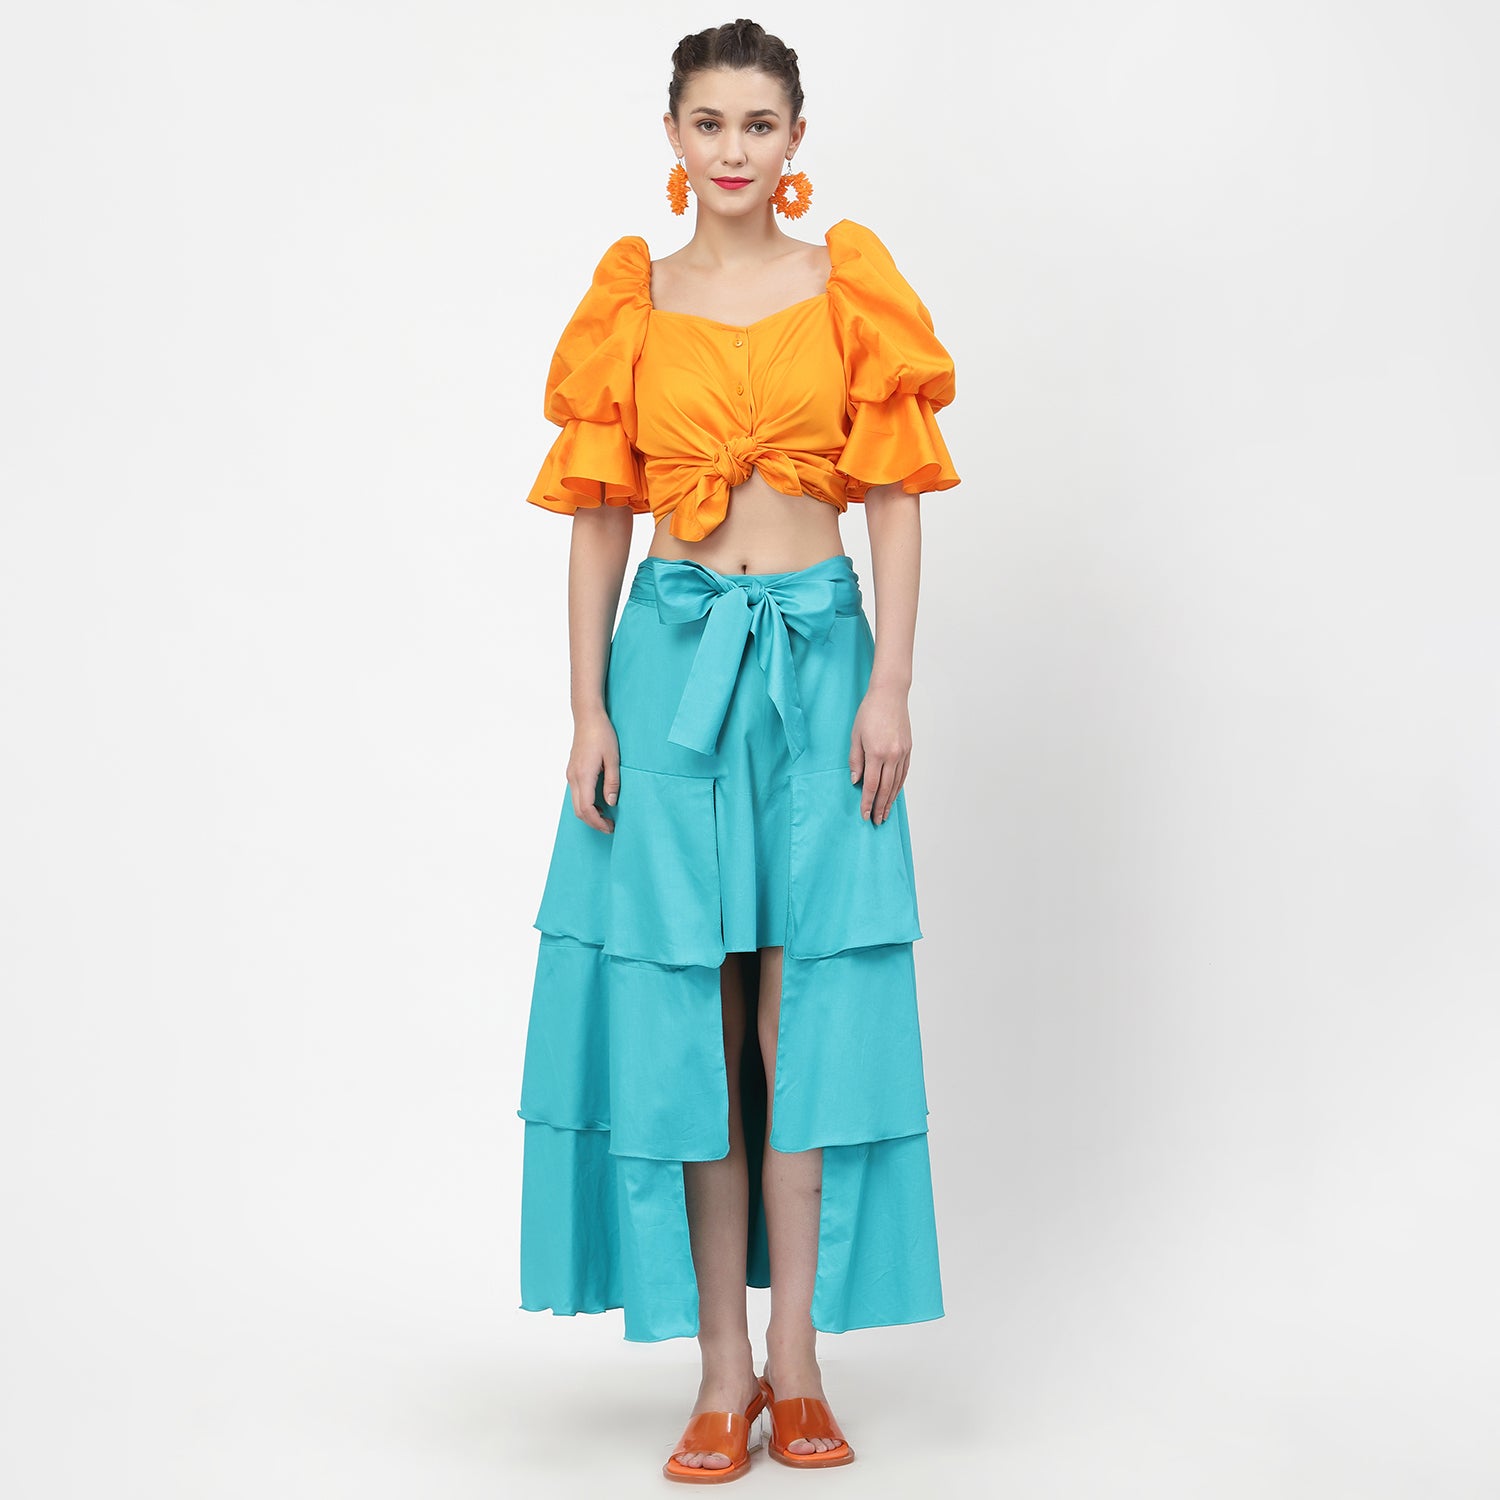 Turquoise Layered Skirt